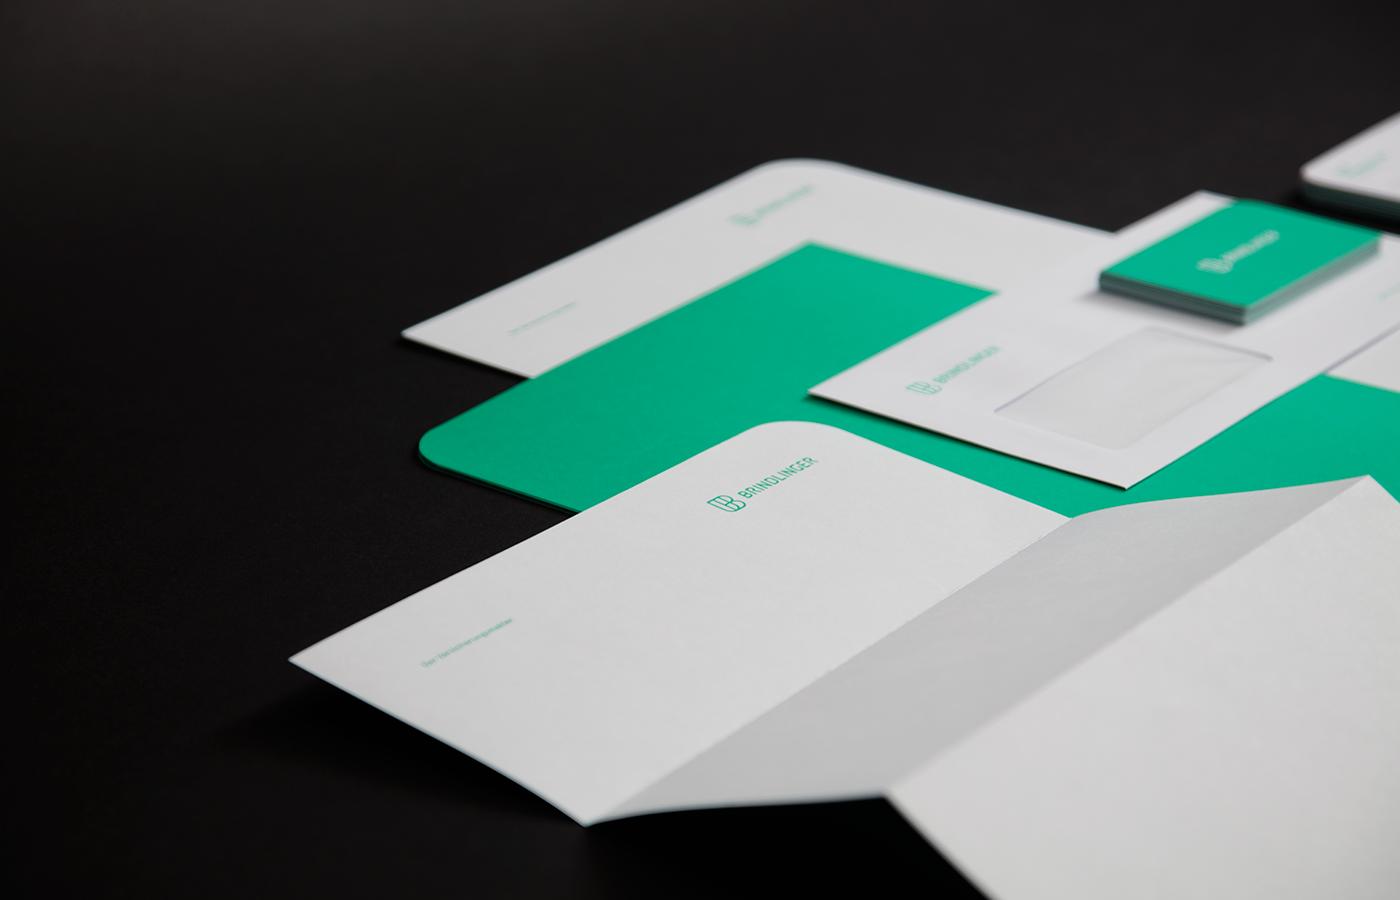 Icarus Brindlinger Insurance broker Corporate Design redesign creative green pantone brochure businesscards stationary austria editorial print identity